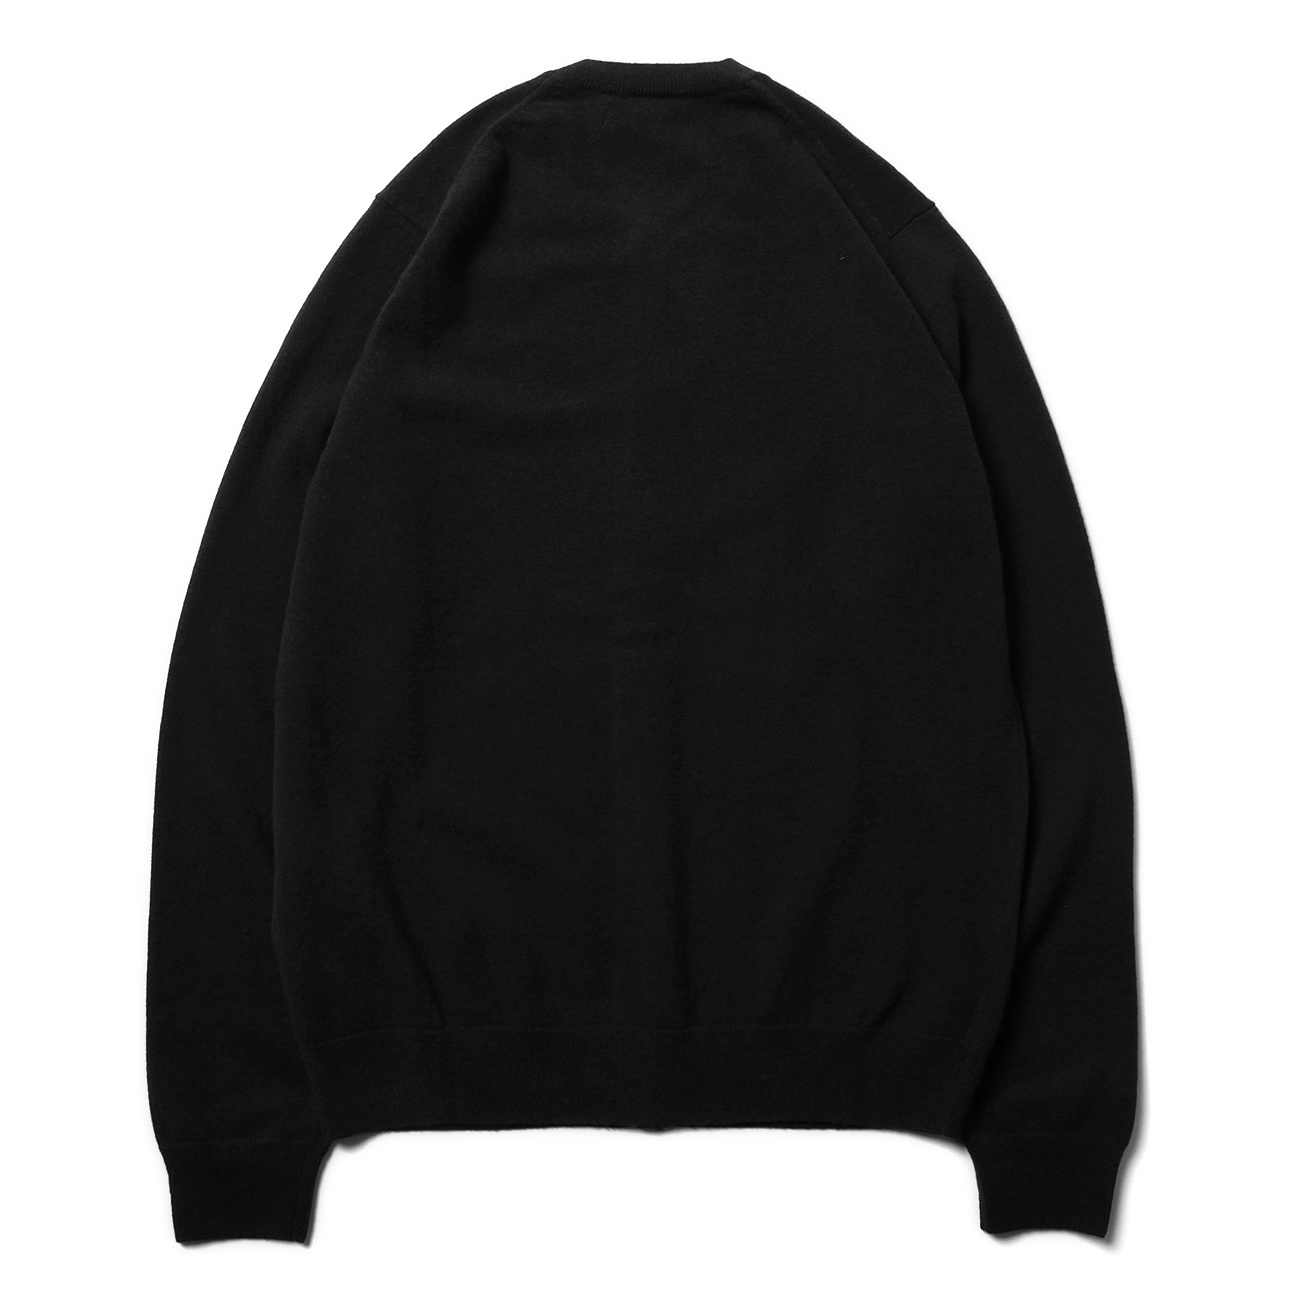 fully fashioned knit cardigan round-neck - Black